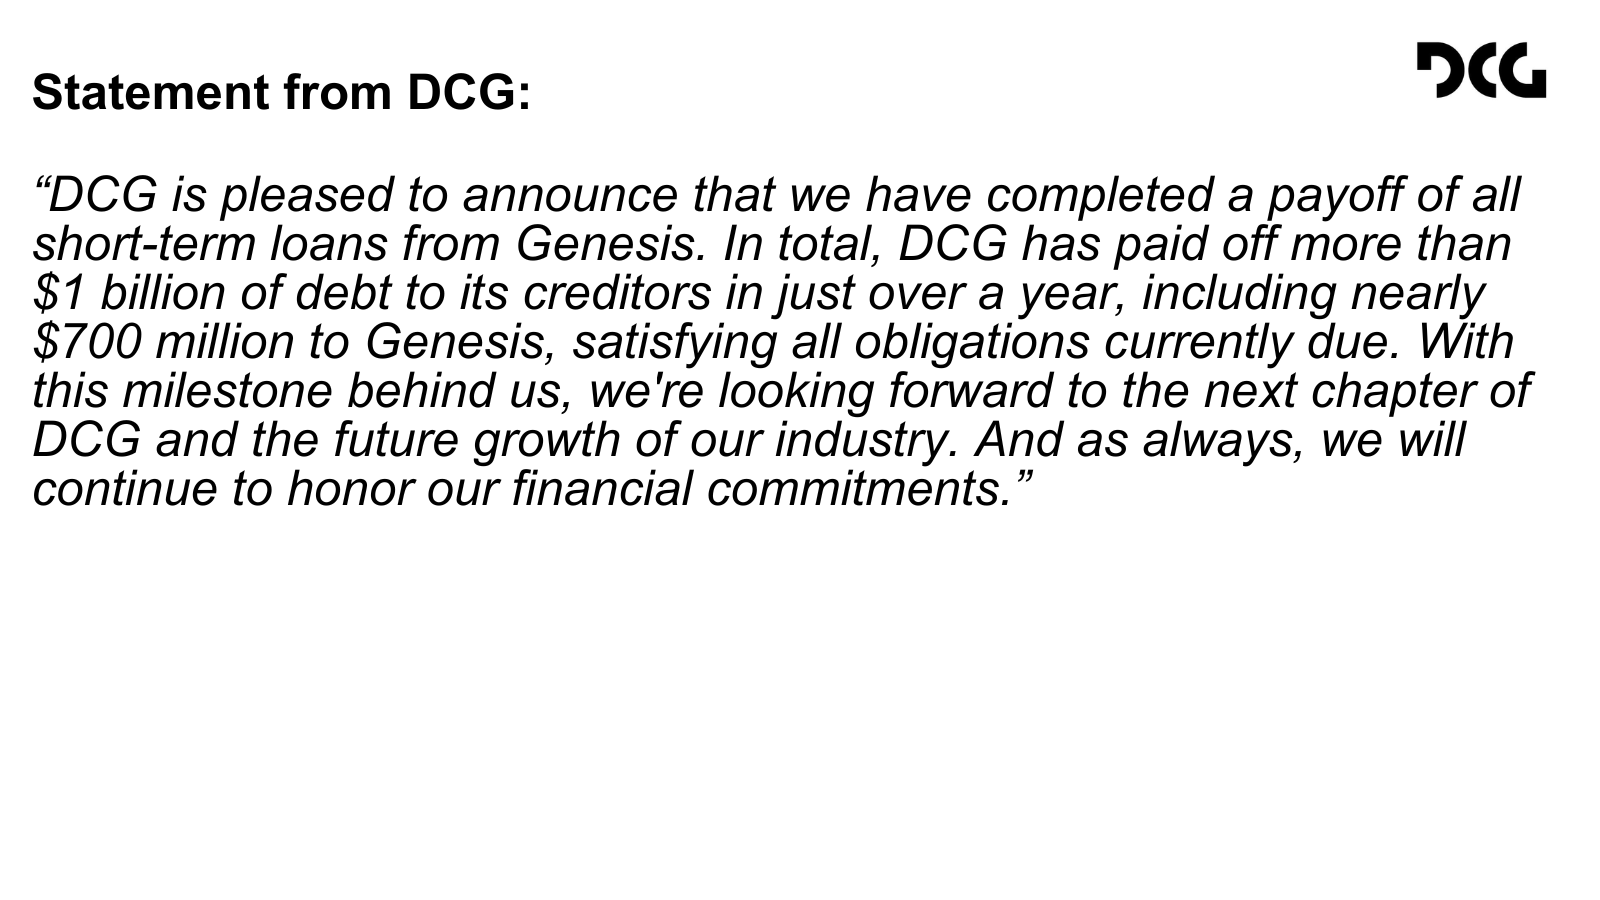 DCG：已向债权人偿还超10亿美元债务，包括Genesis的近7亿美元